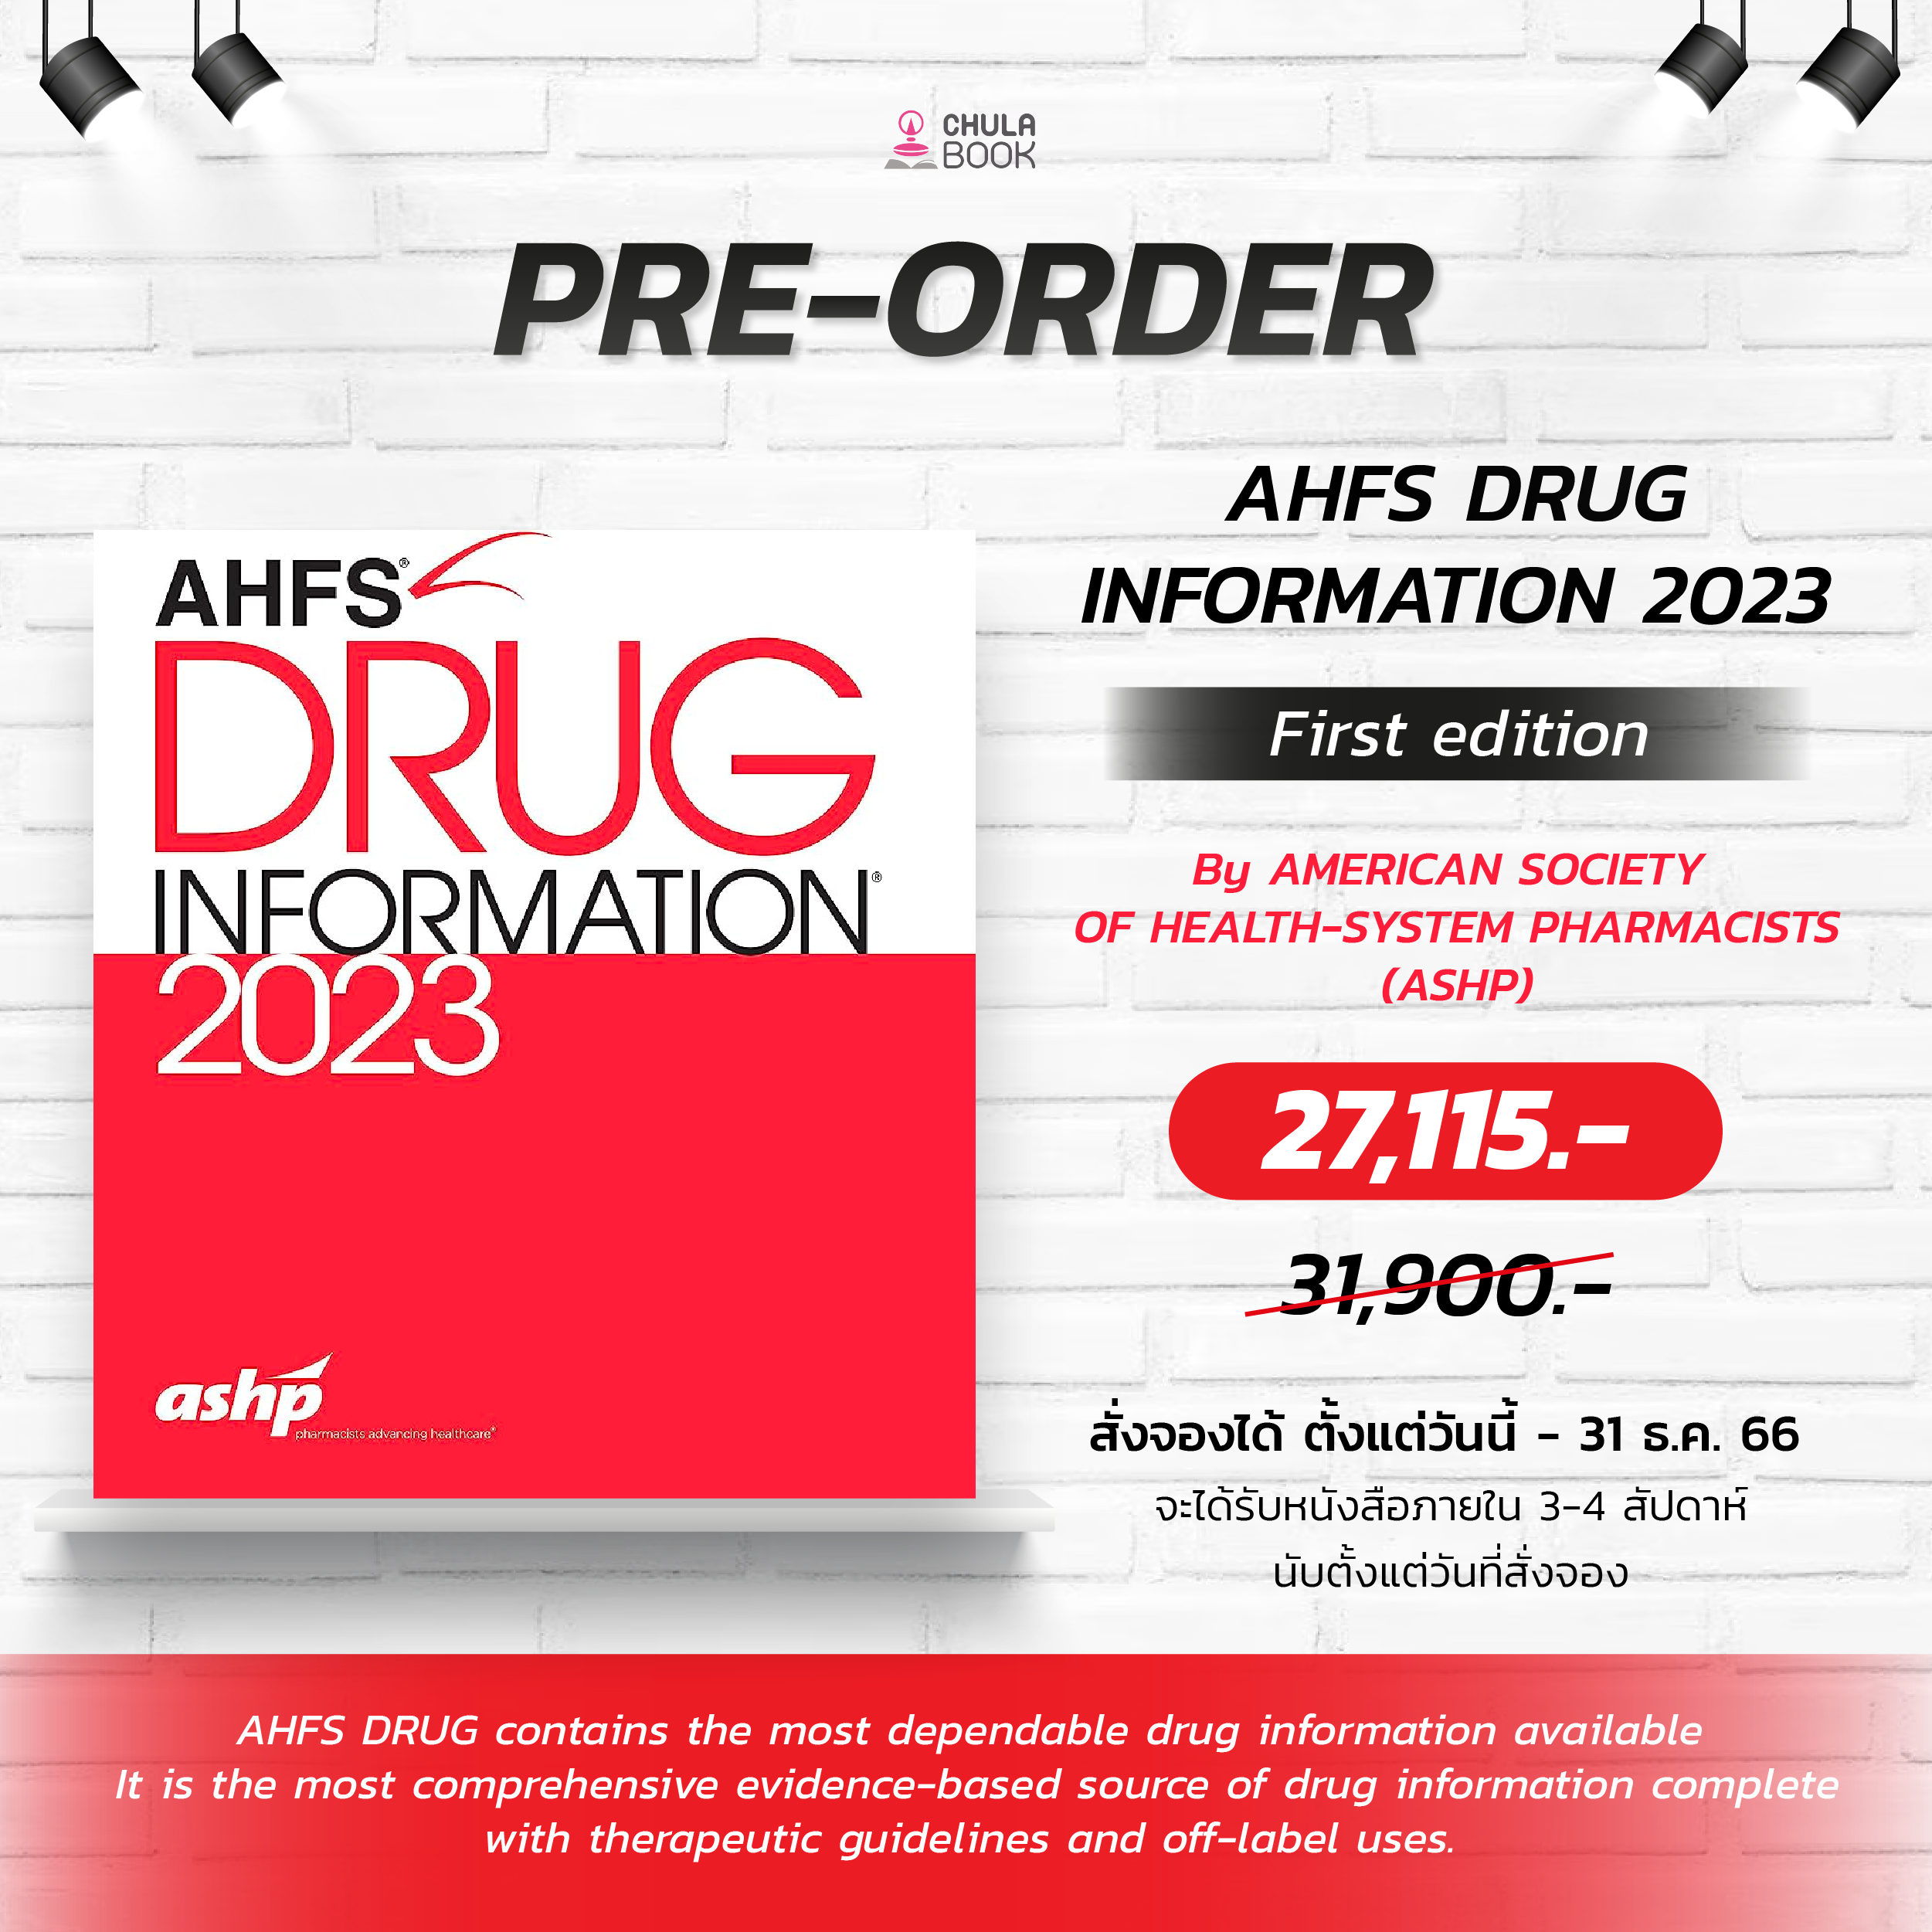 AHFS DRUG INFORMATION 2023